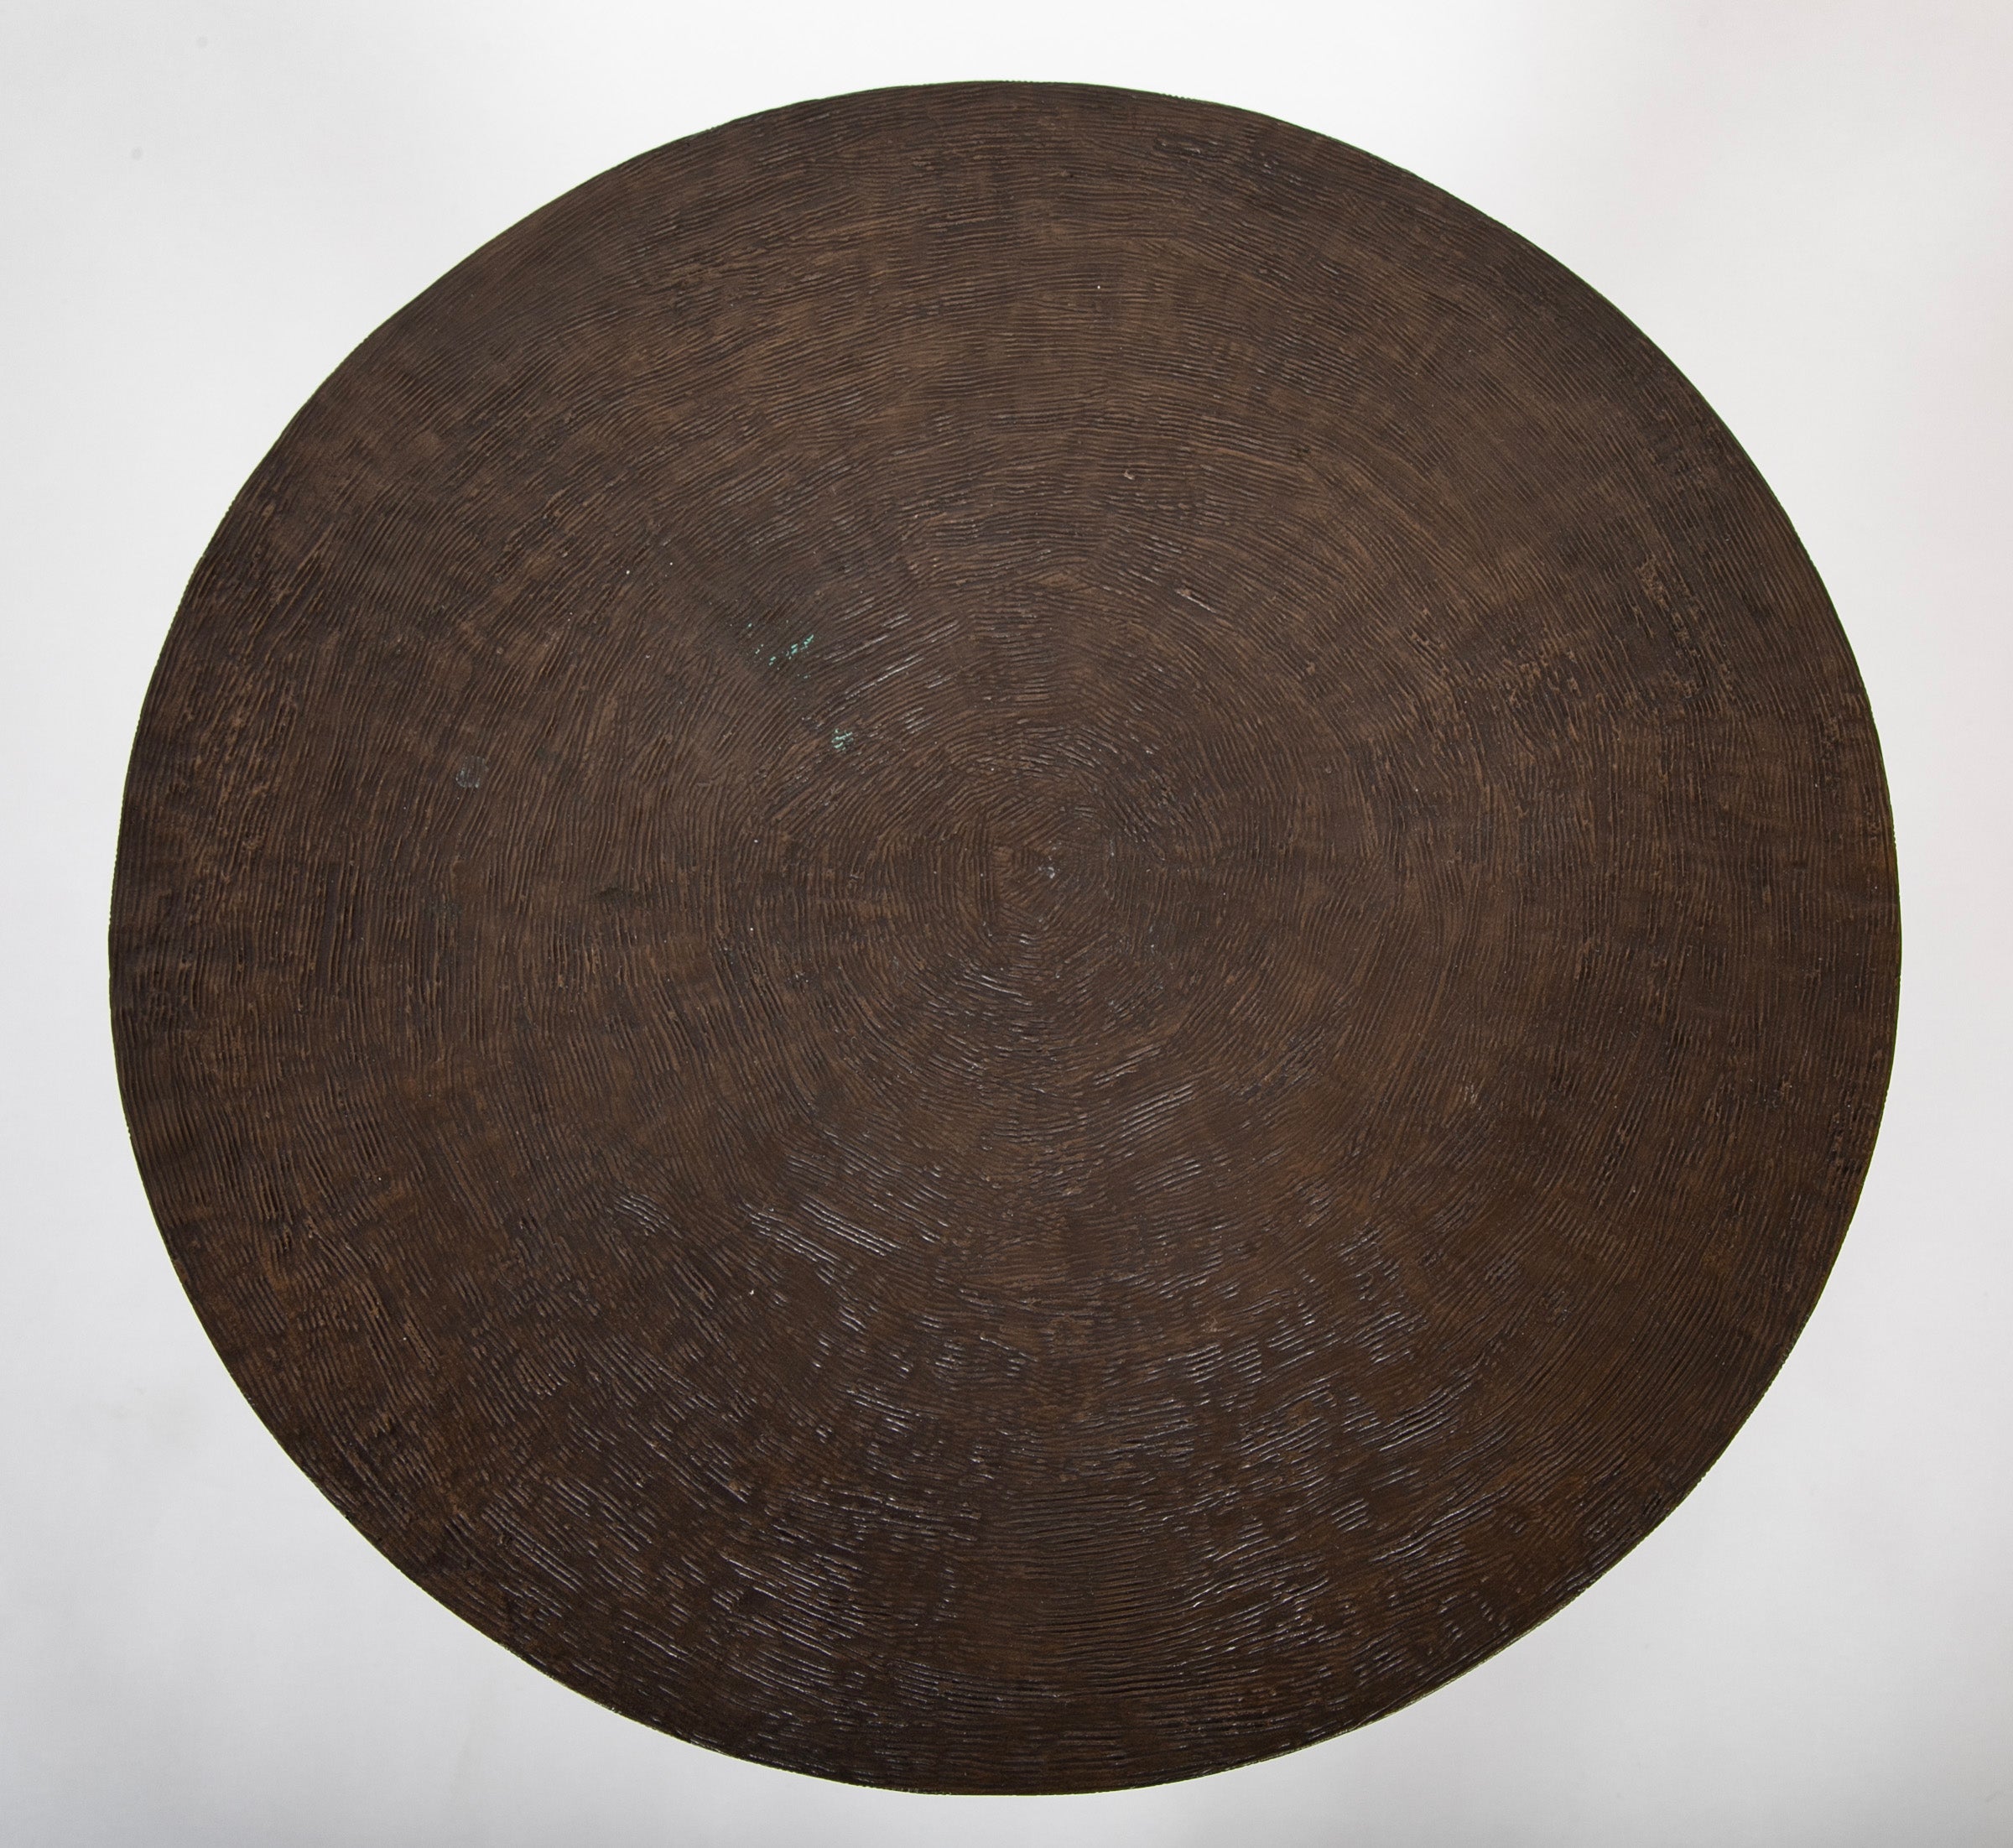 Bronze Pedestal Table by Tom Corbin Alexandria II